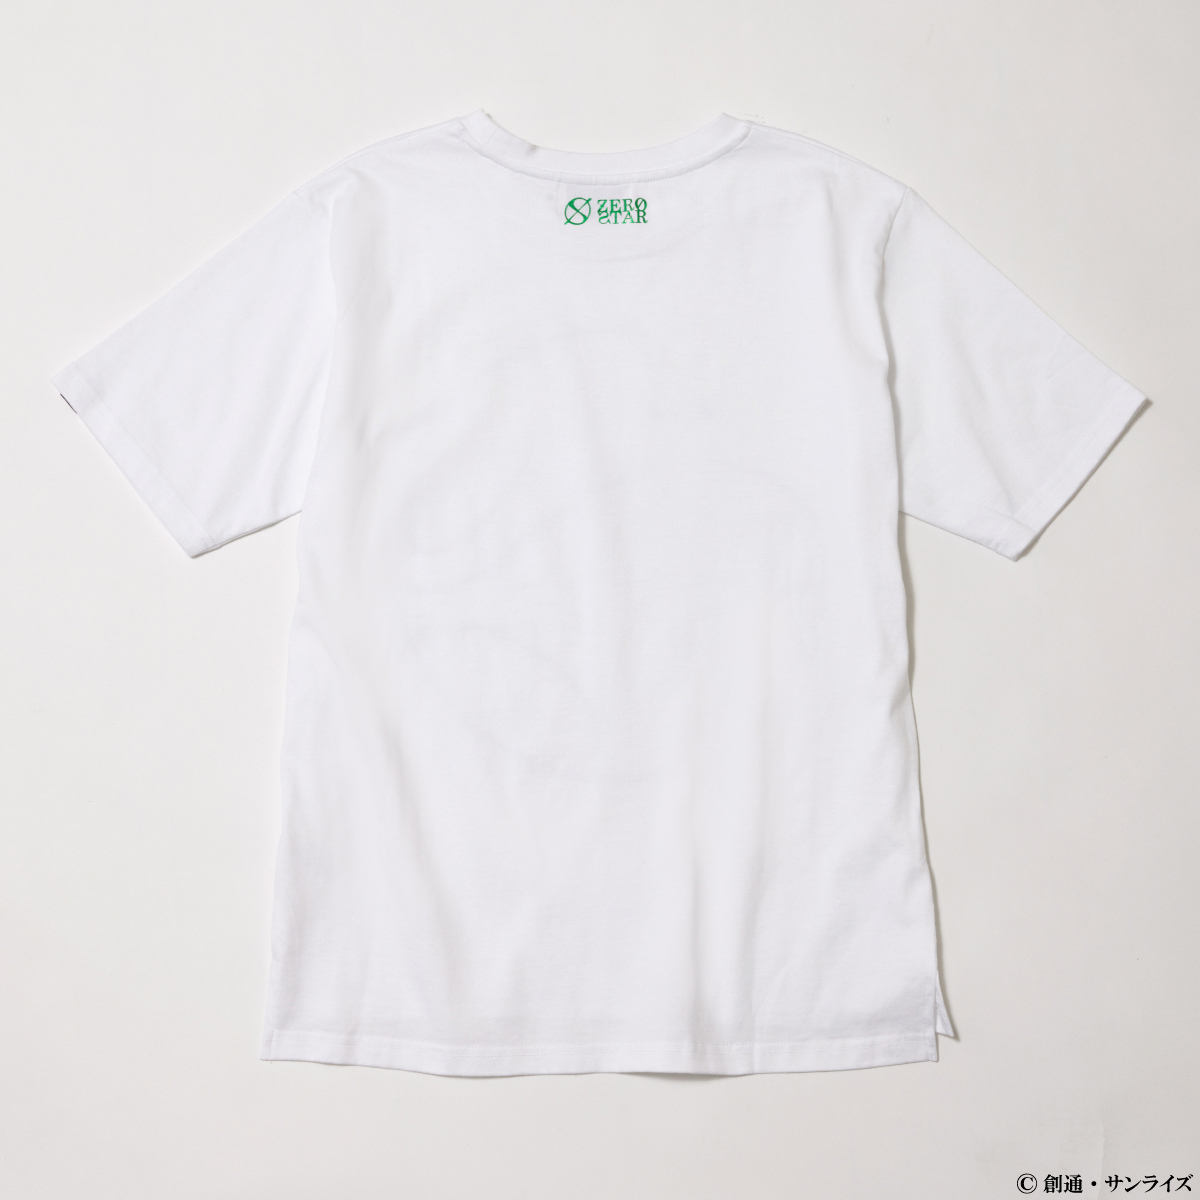 STRICT-G ZERO STAR『機動戦士ガンダム』Tシャツ ハロ